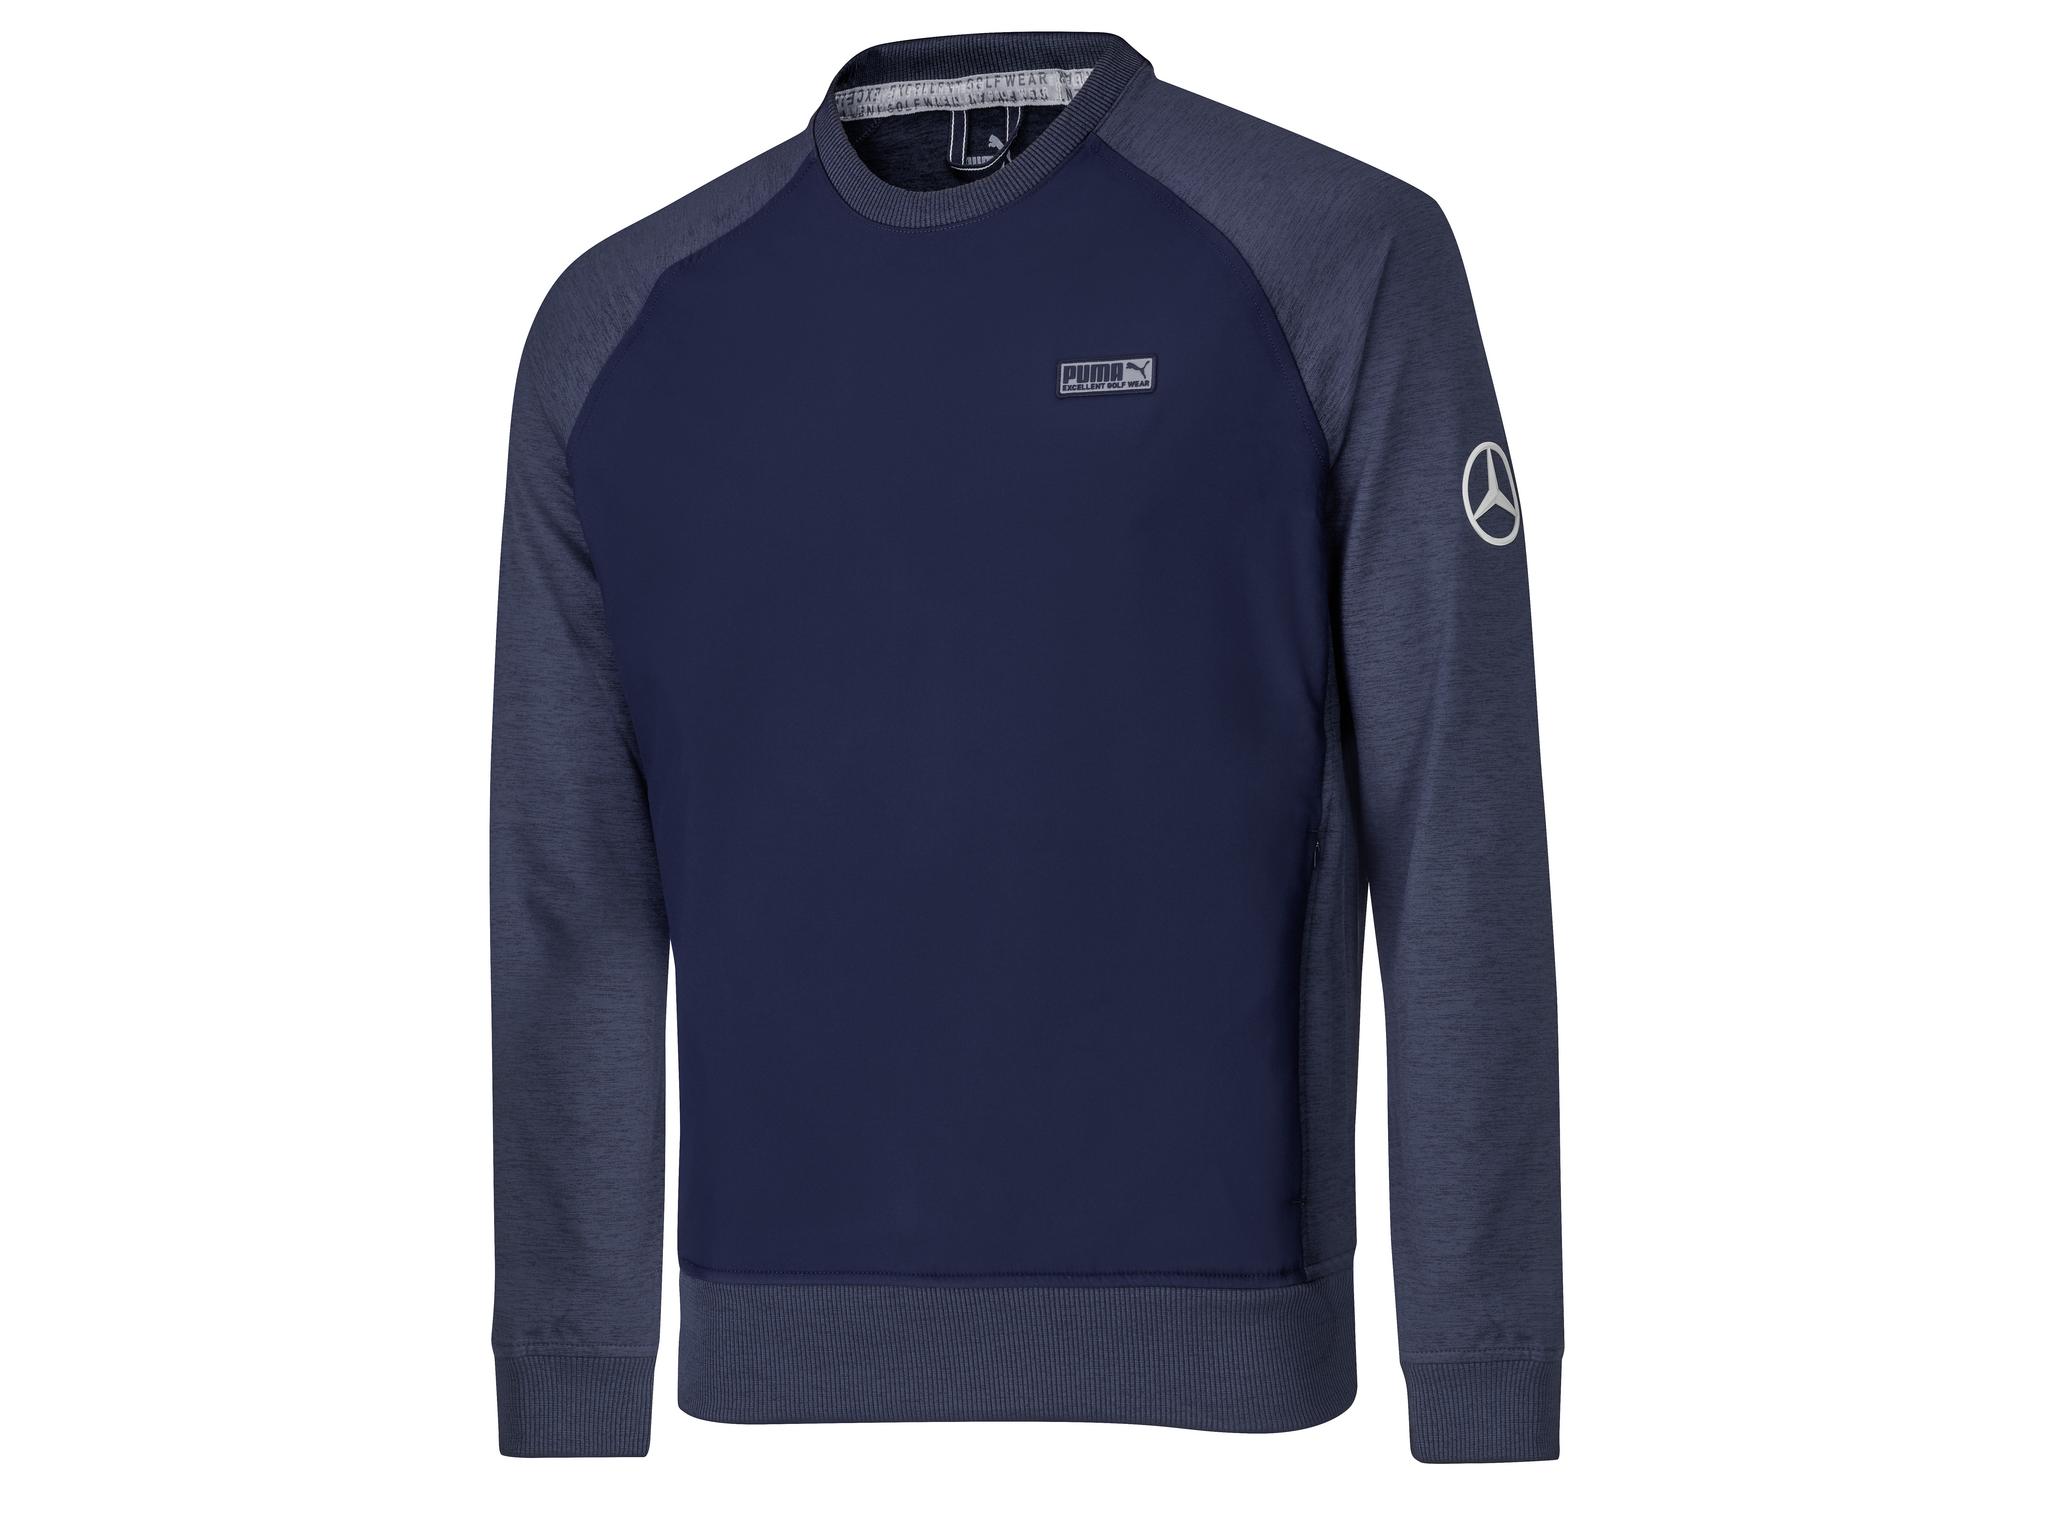 Golf-Sweater Herren - navy, XXL